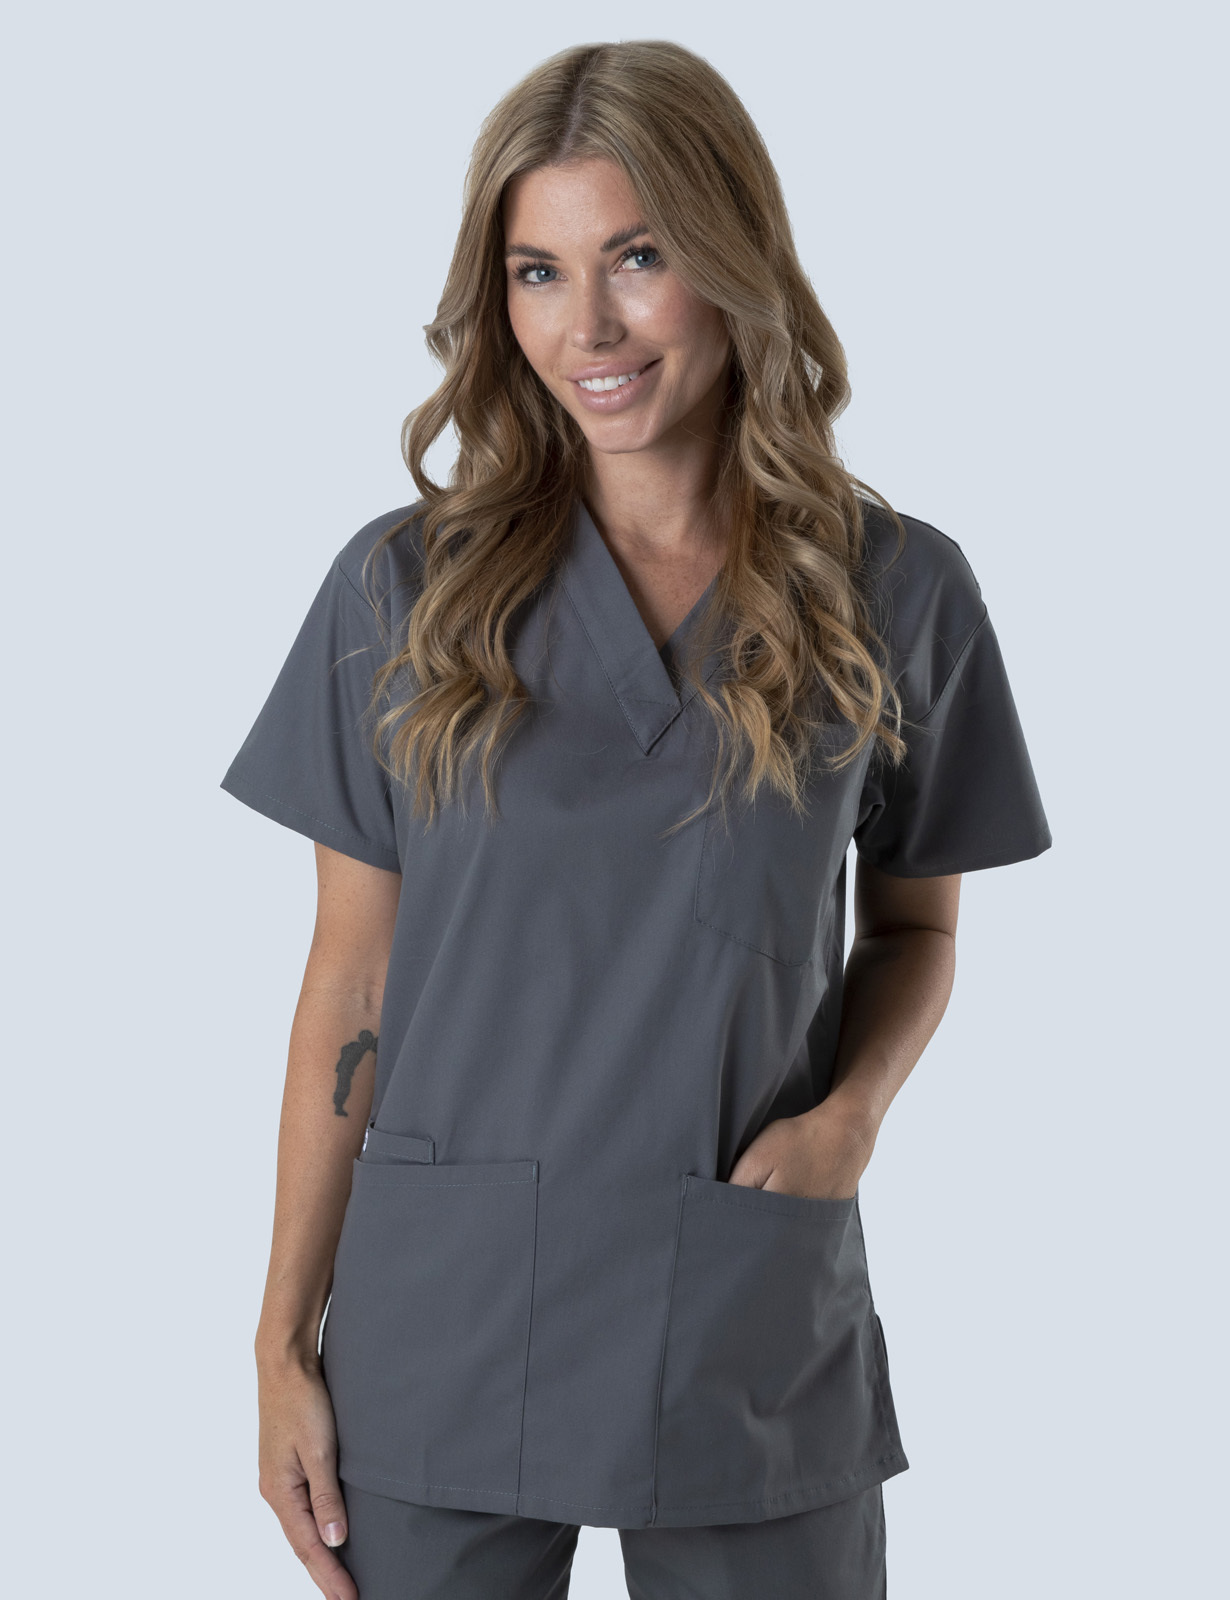 Caloundra Hospital - RN Emergency (4 Pocket Scrub Top and Cargo Pants in Steel Grey incl Logos)